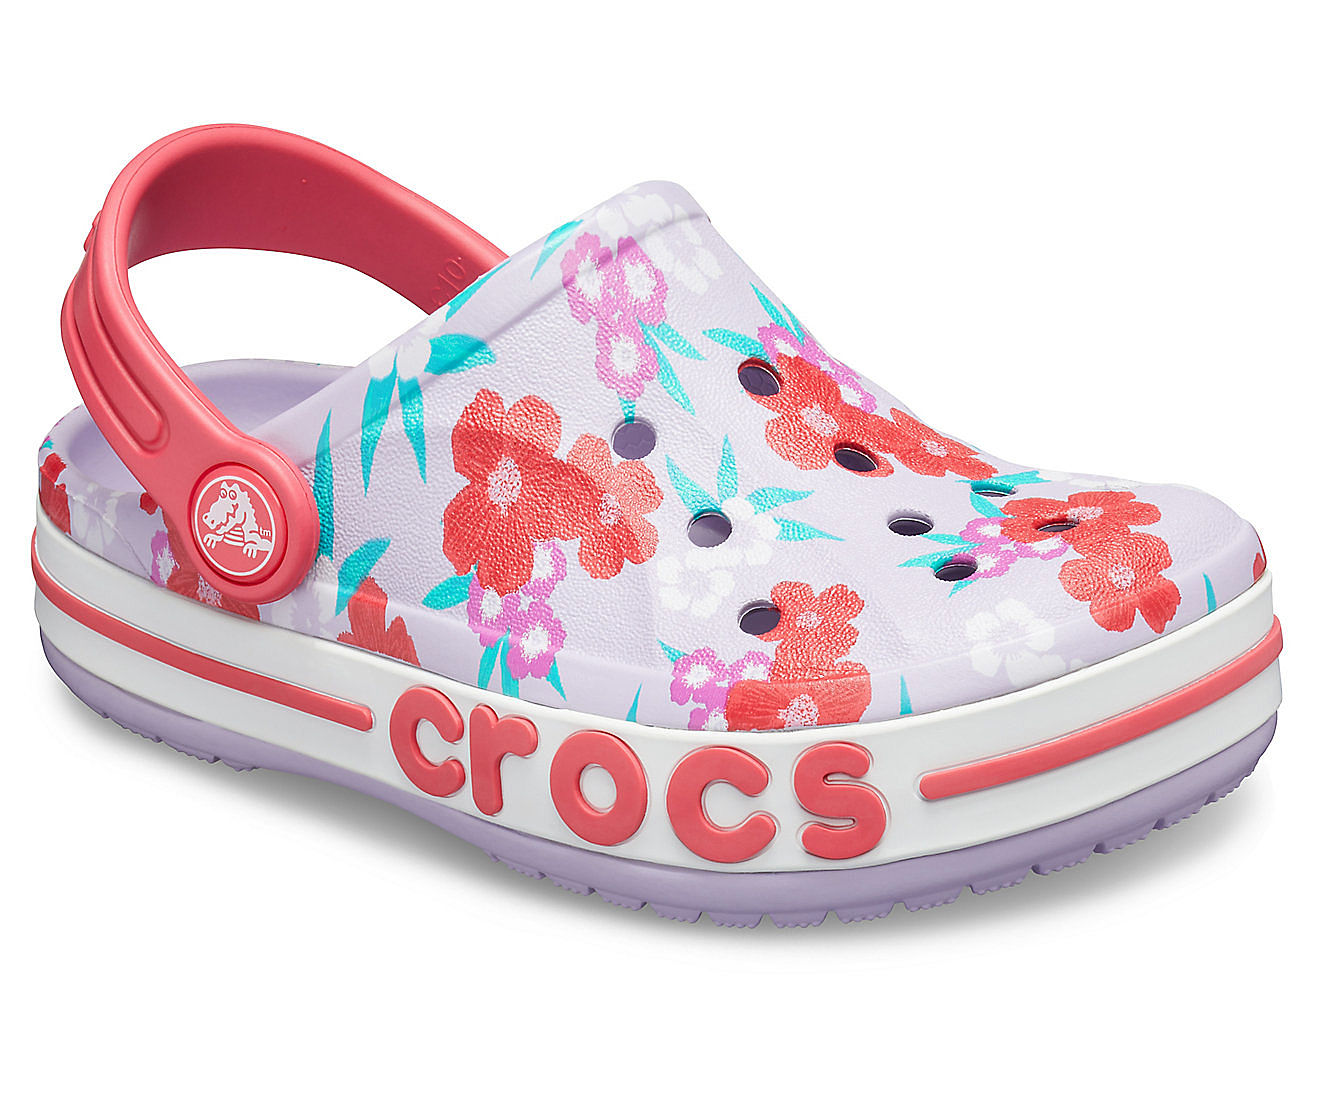 $20 crocs